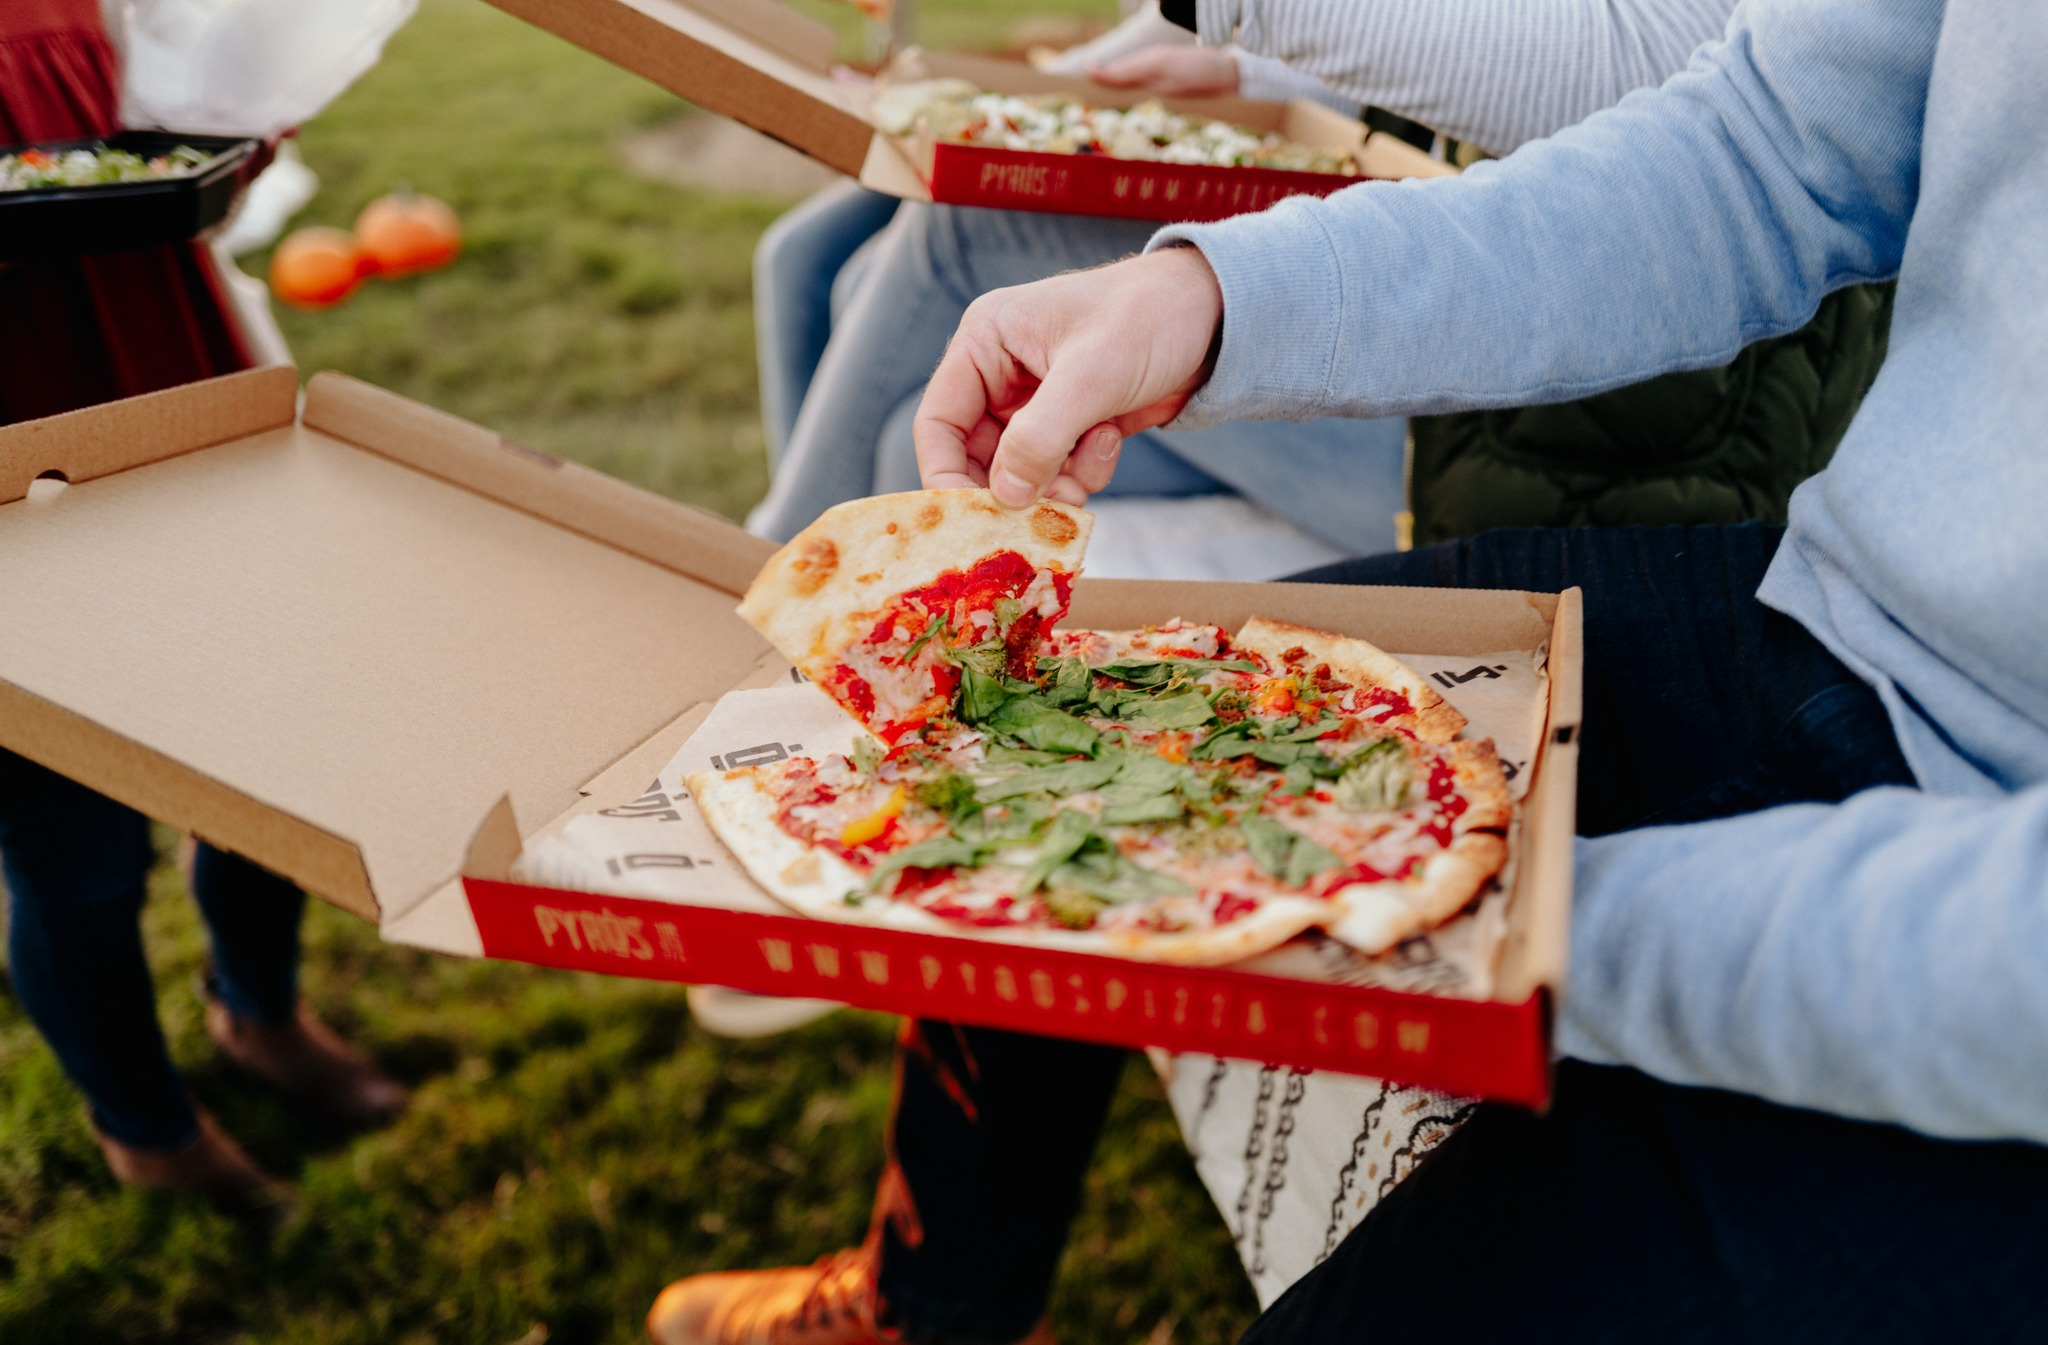 Pyro's Fire Fresh Pizza 募金活動を成功させるための Firestarter ガイド - GroupRaise